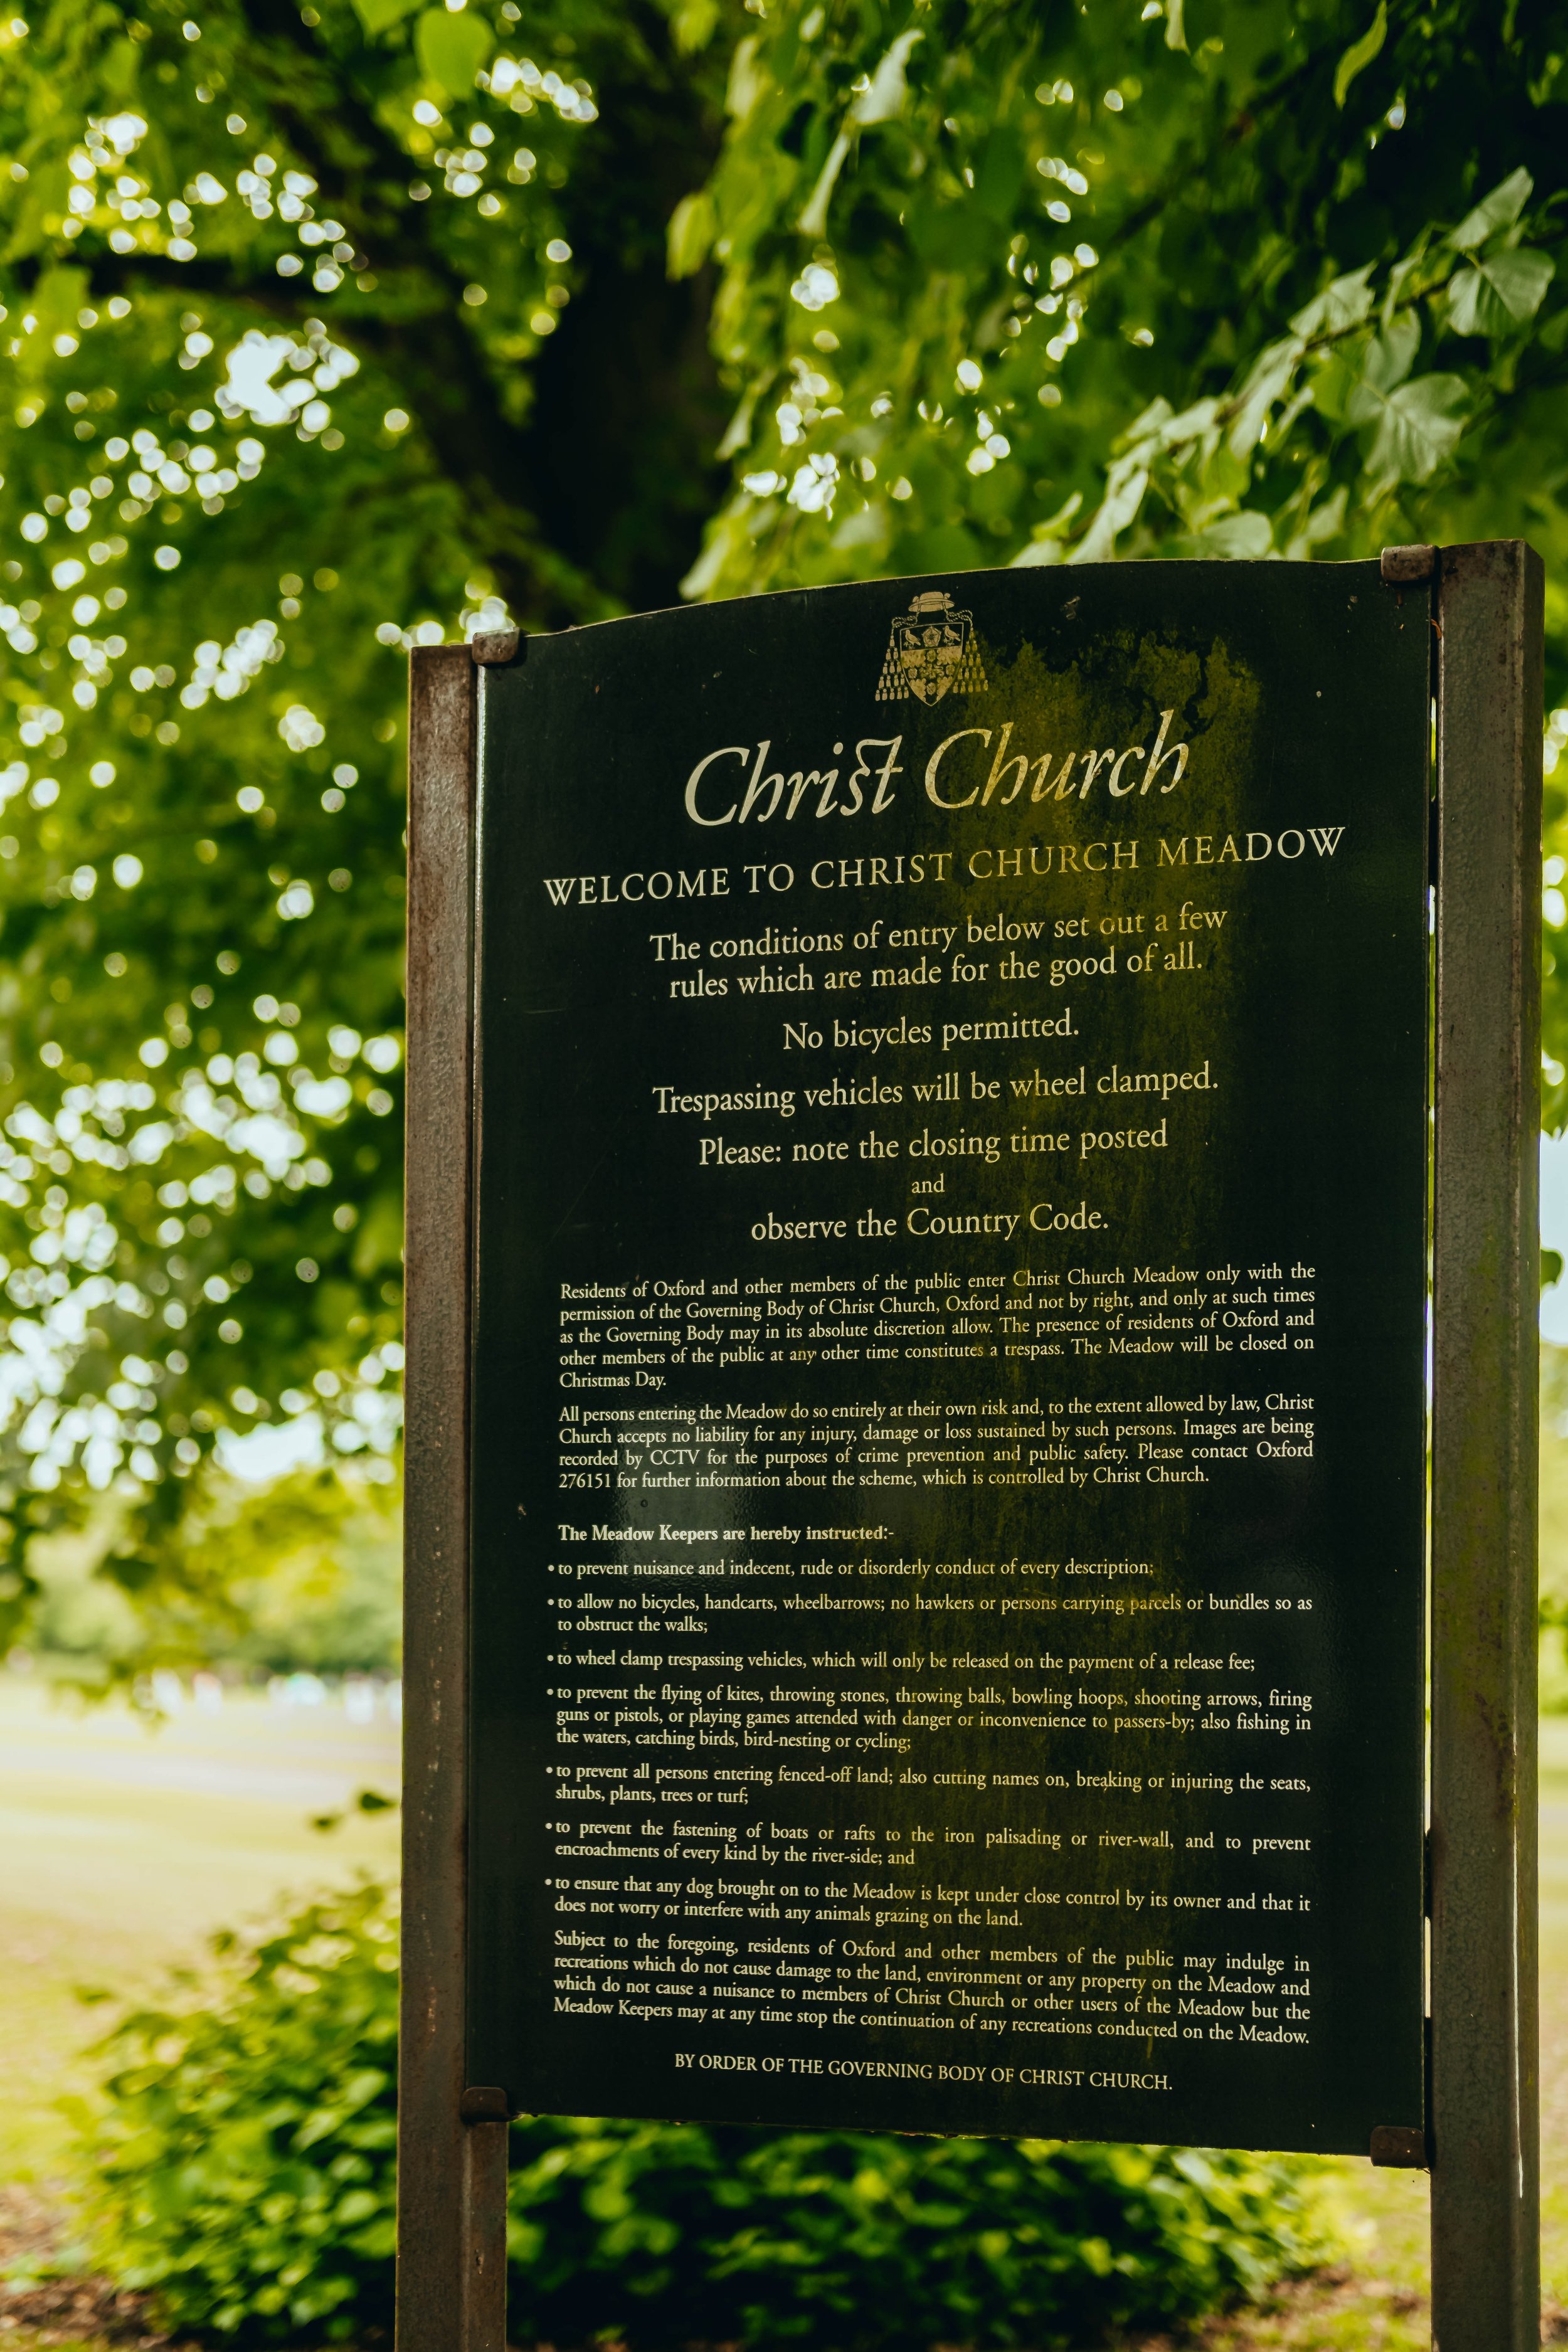 A sign for Christ Church Meadows